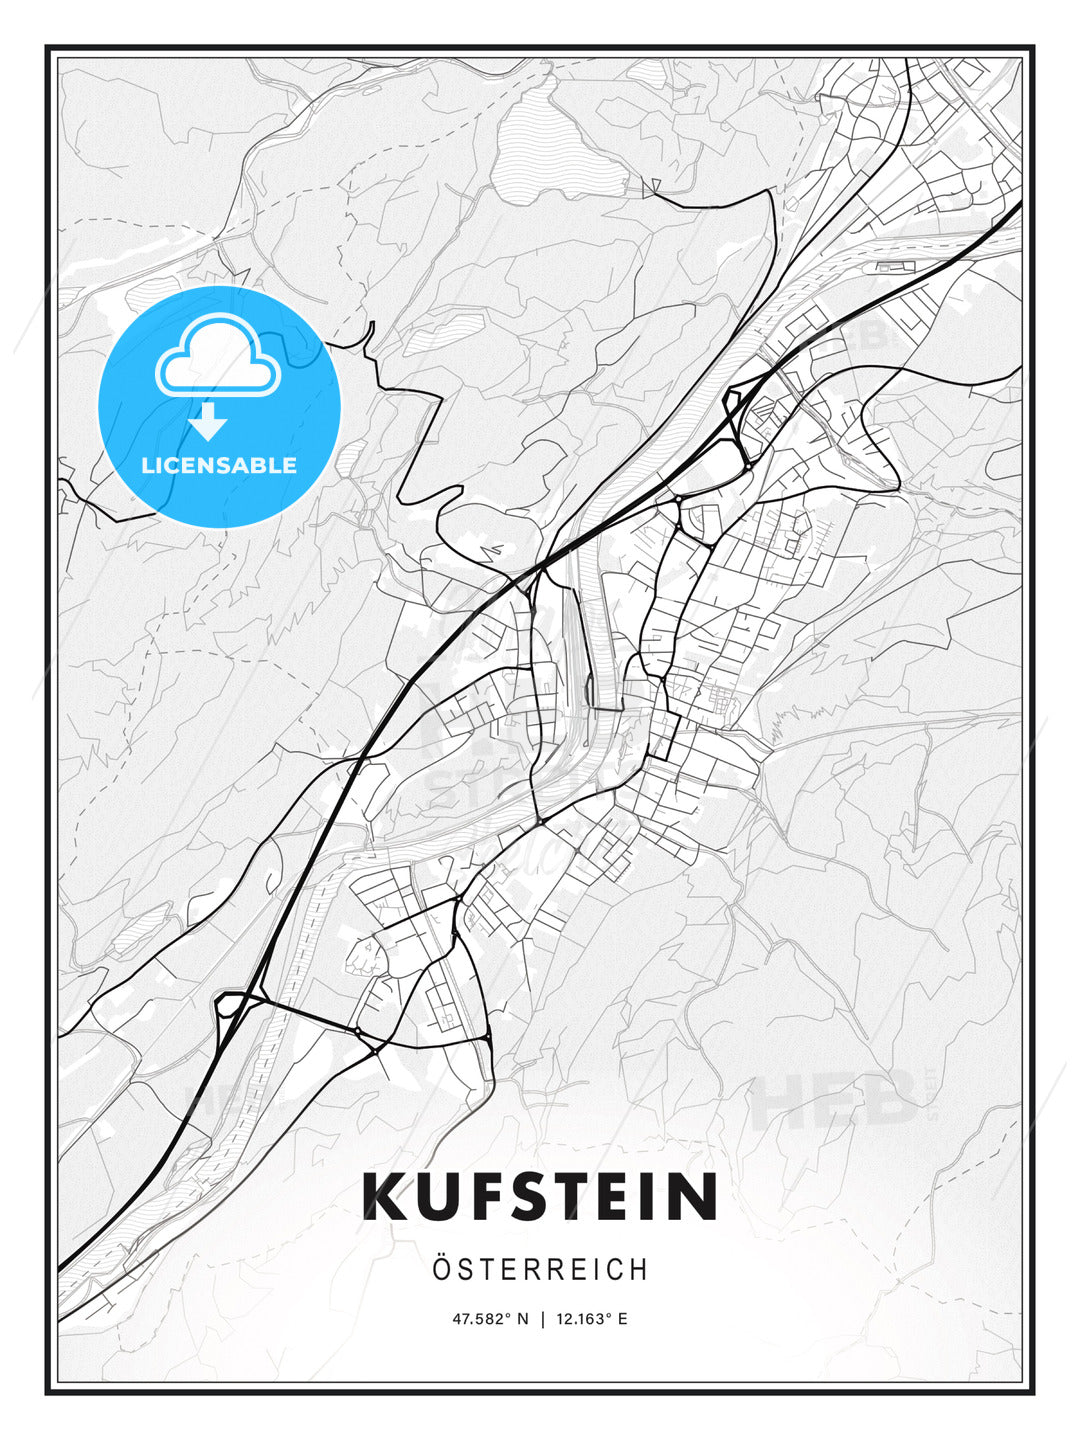 Kufstein, Austria, Modern Print Template in Various Formats - HEBSTREITS Sketches